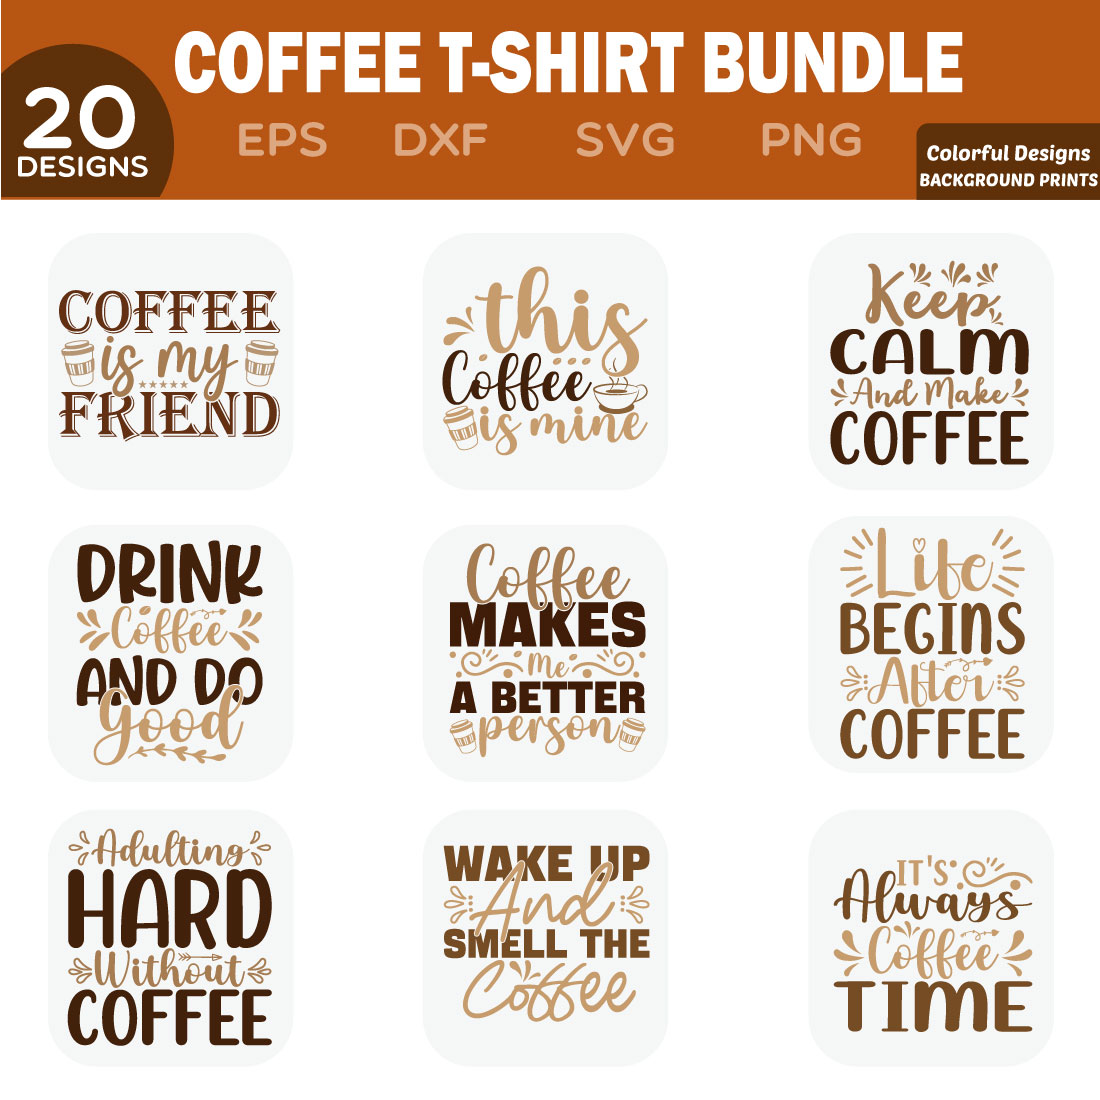 Coffee t-shirt Bundle preview image.